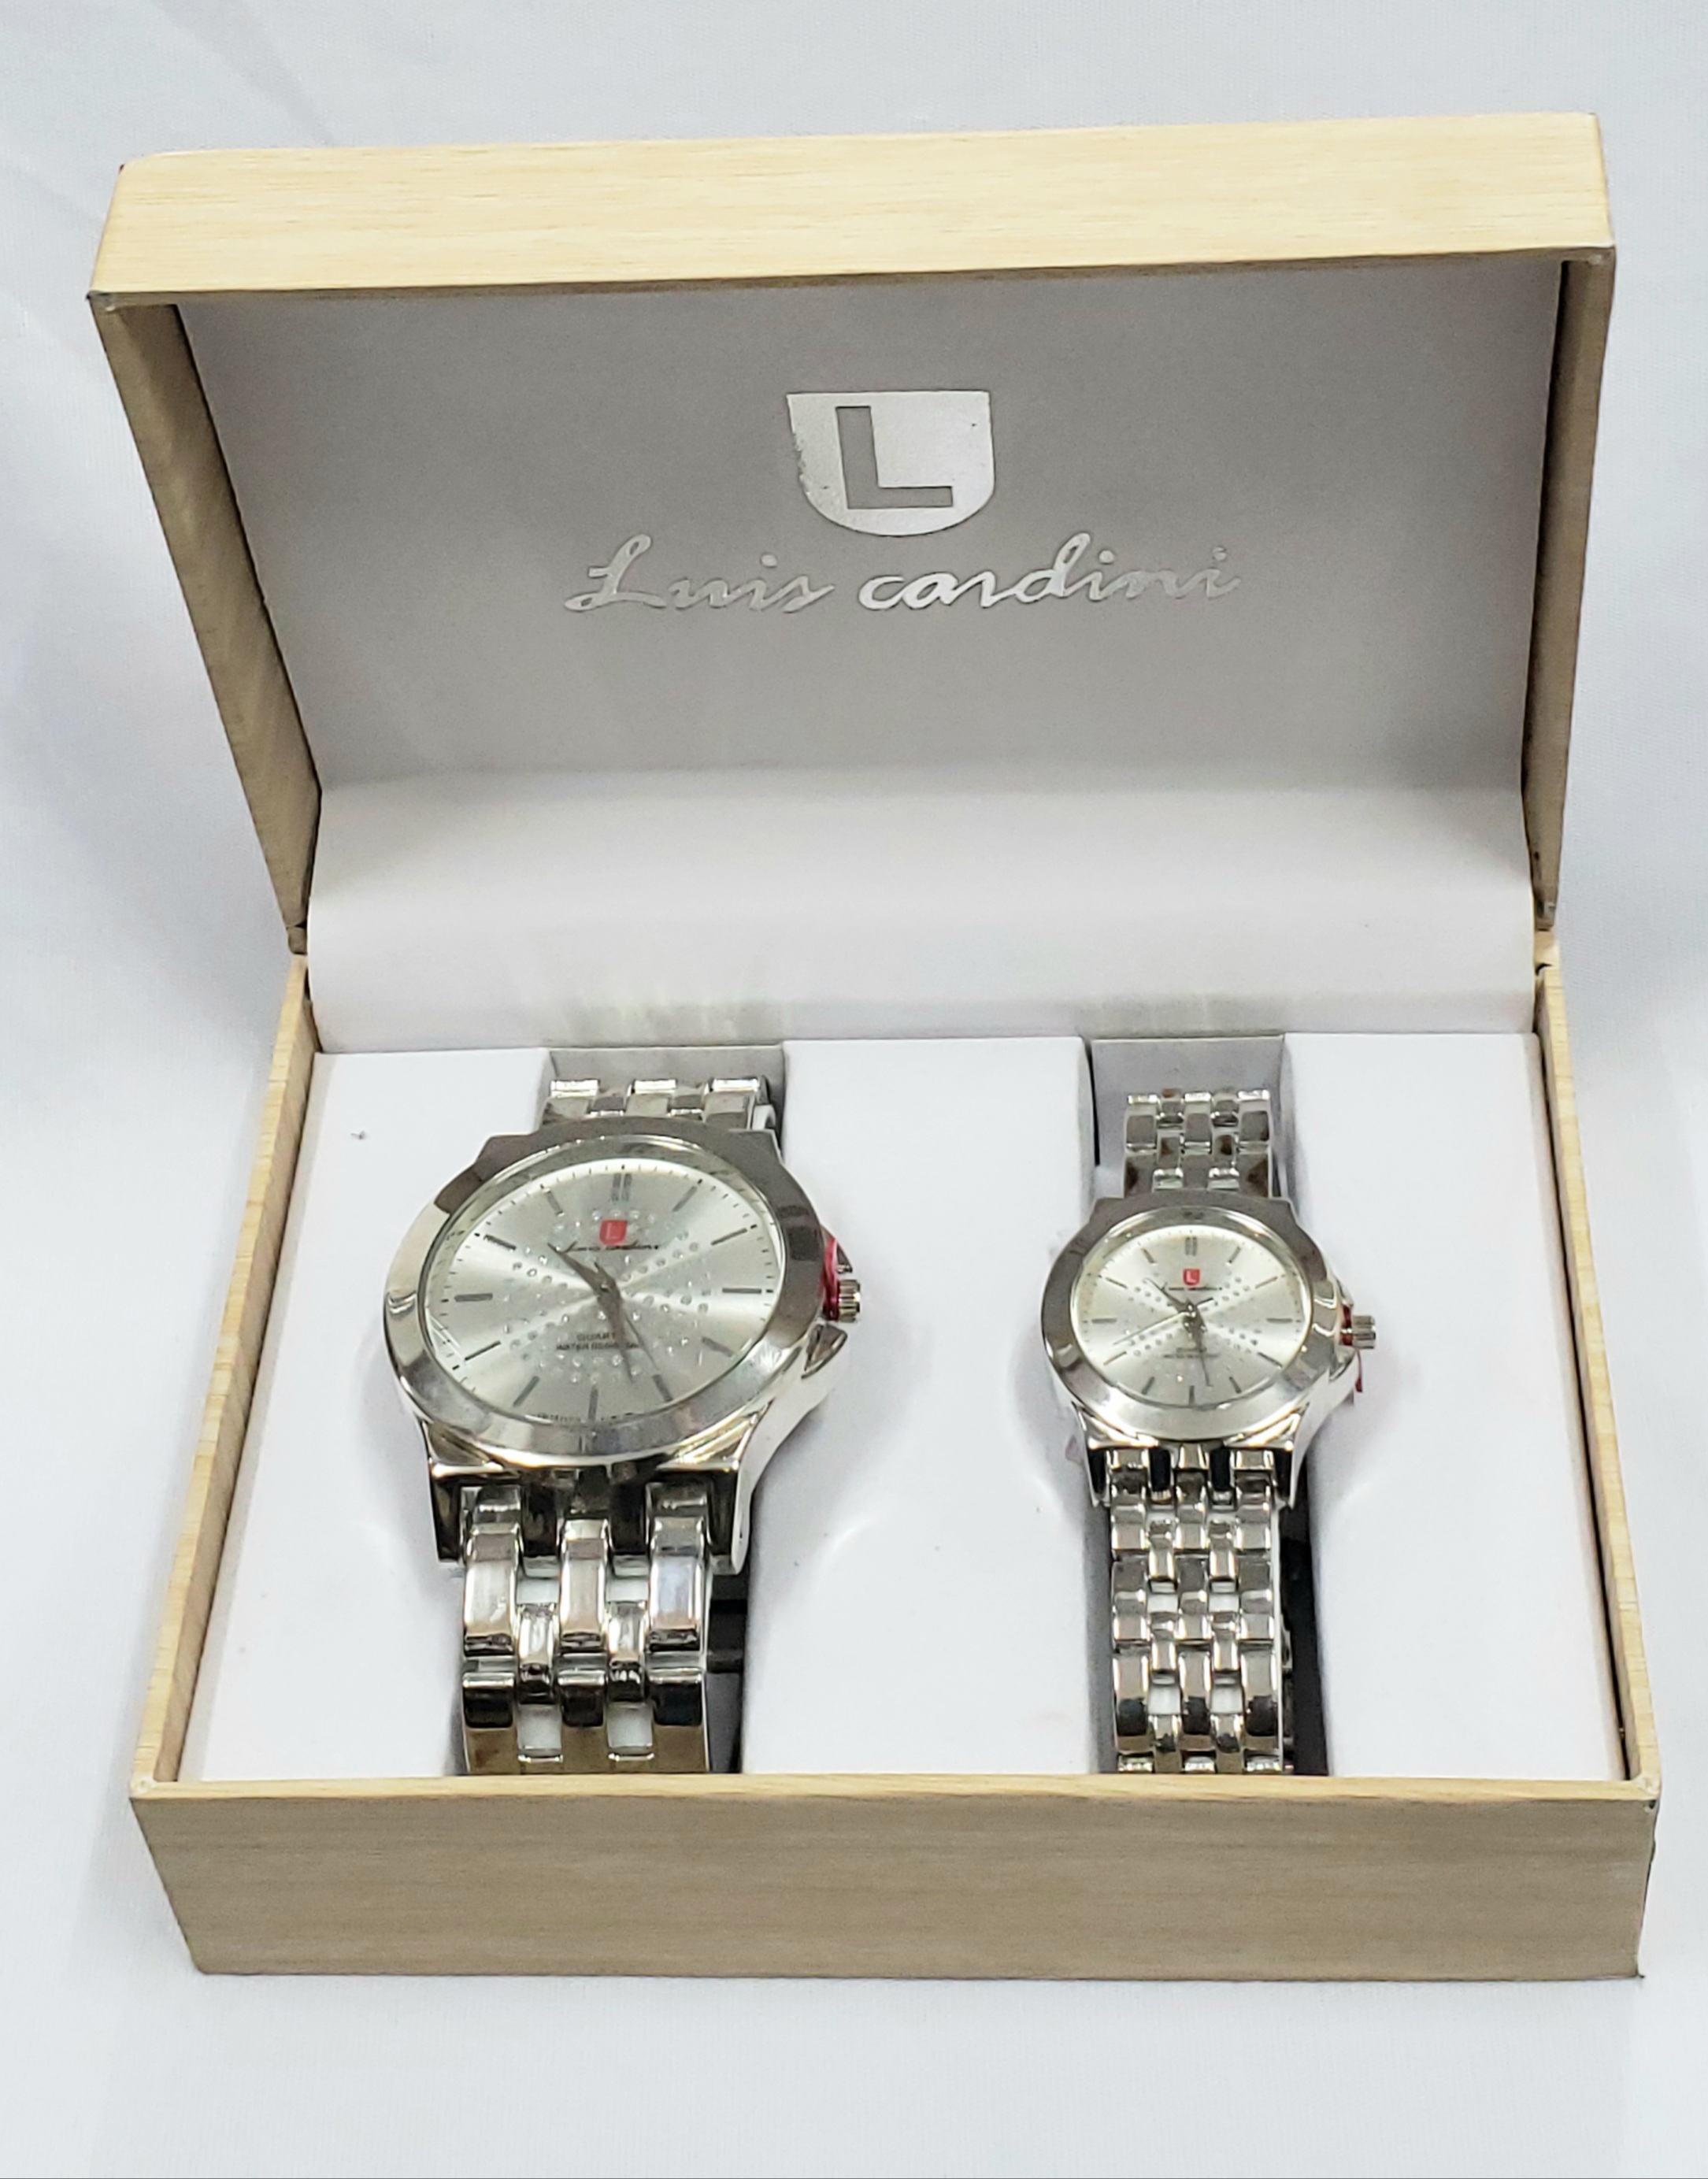 Luis Cardini Watch Gift Box Set